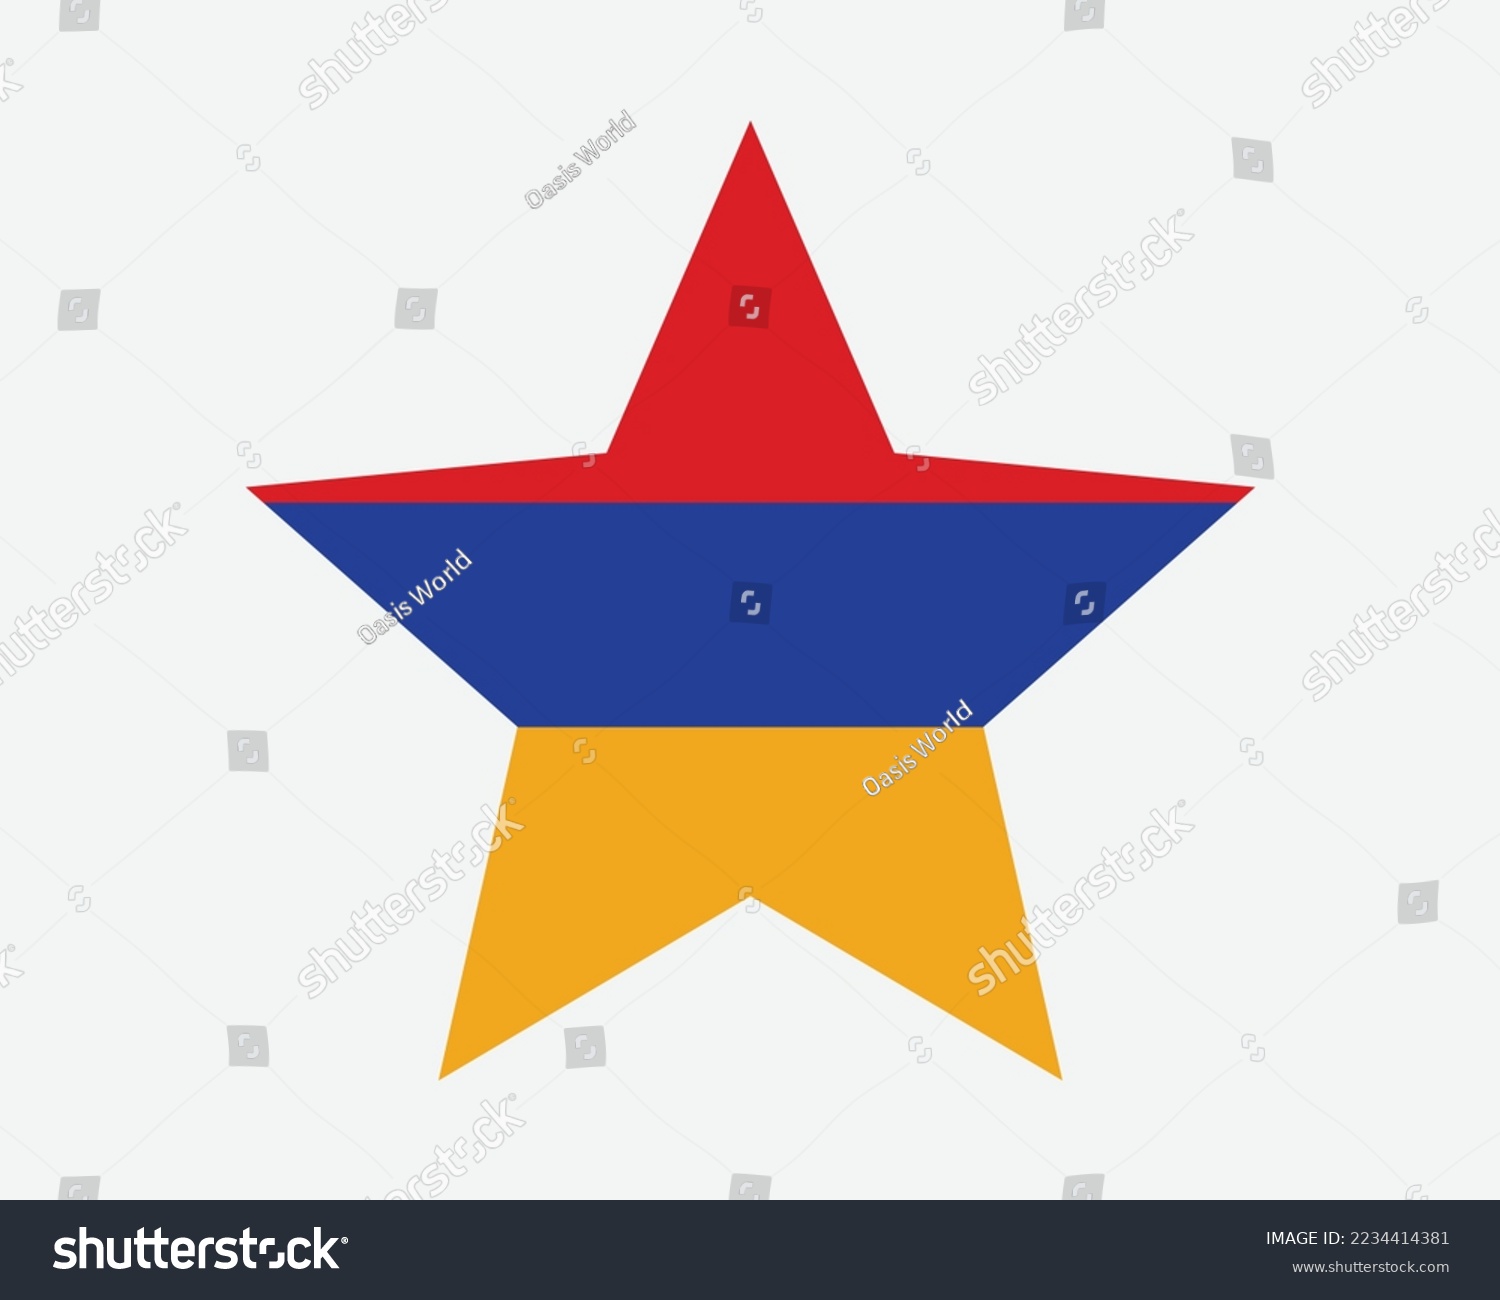 SVG of Armenia Star Flag. Armenian Star Shape Flag. Country National Banner Icon Symbol Vector 2D Flat Artwork Graphic Illustration svg